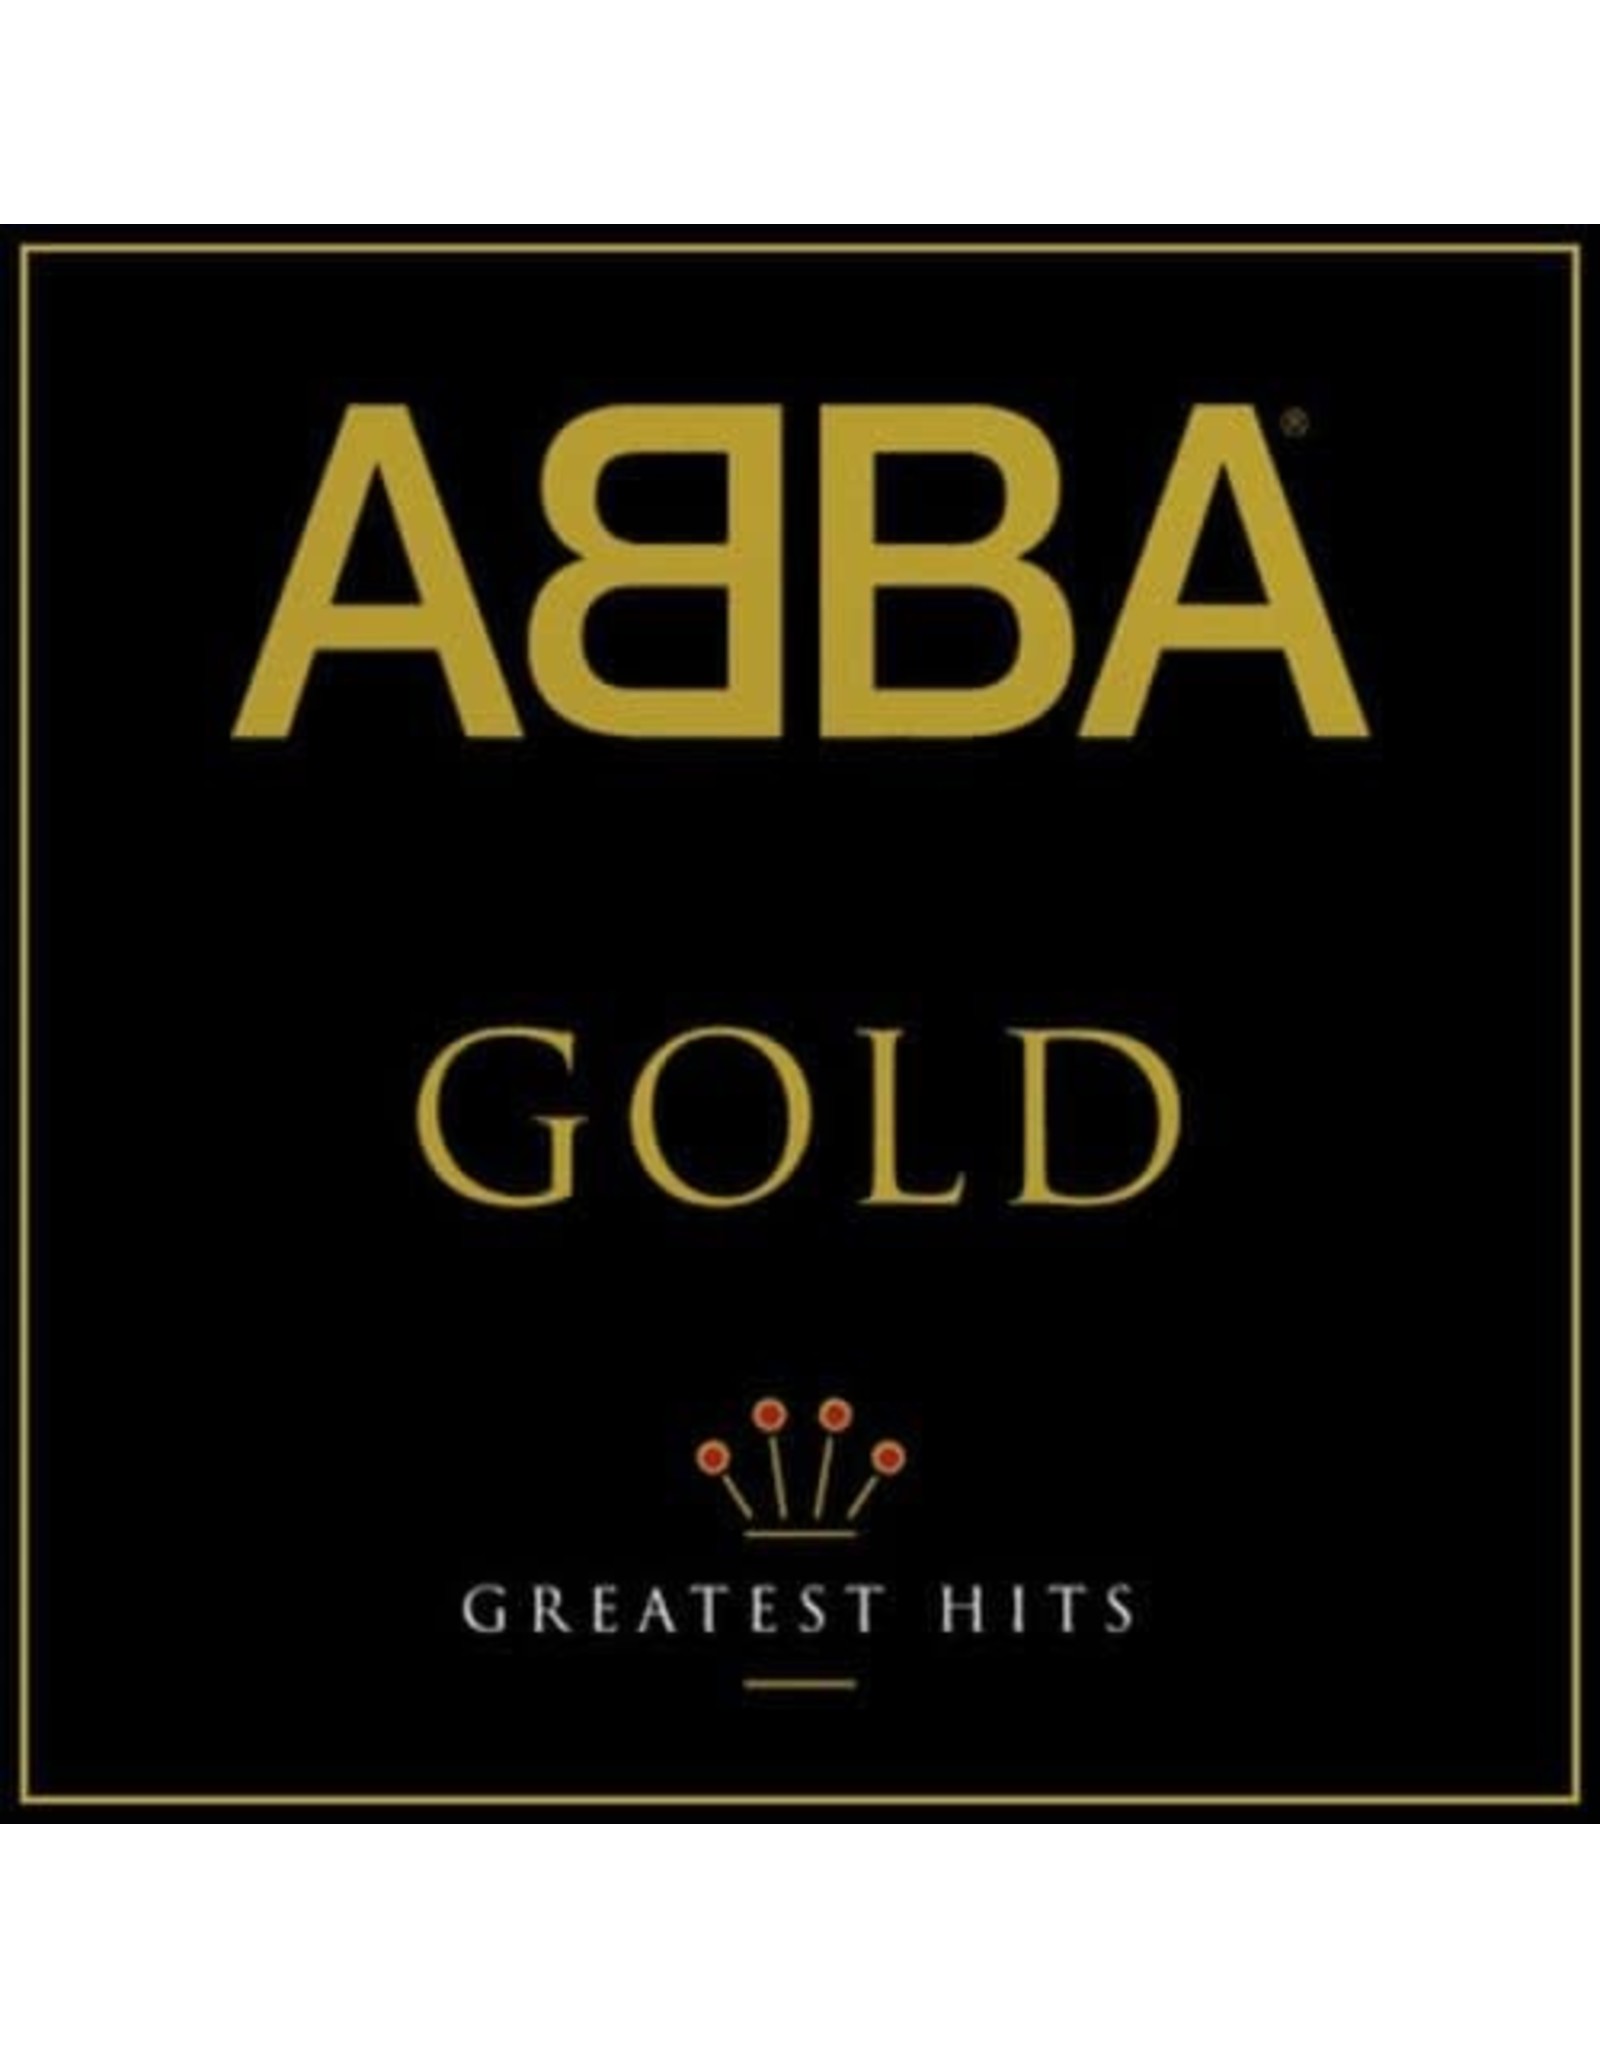 ABBA - Gold (Greatest Hits) [Gold Vinyl]